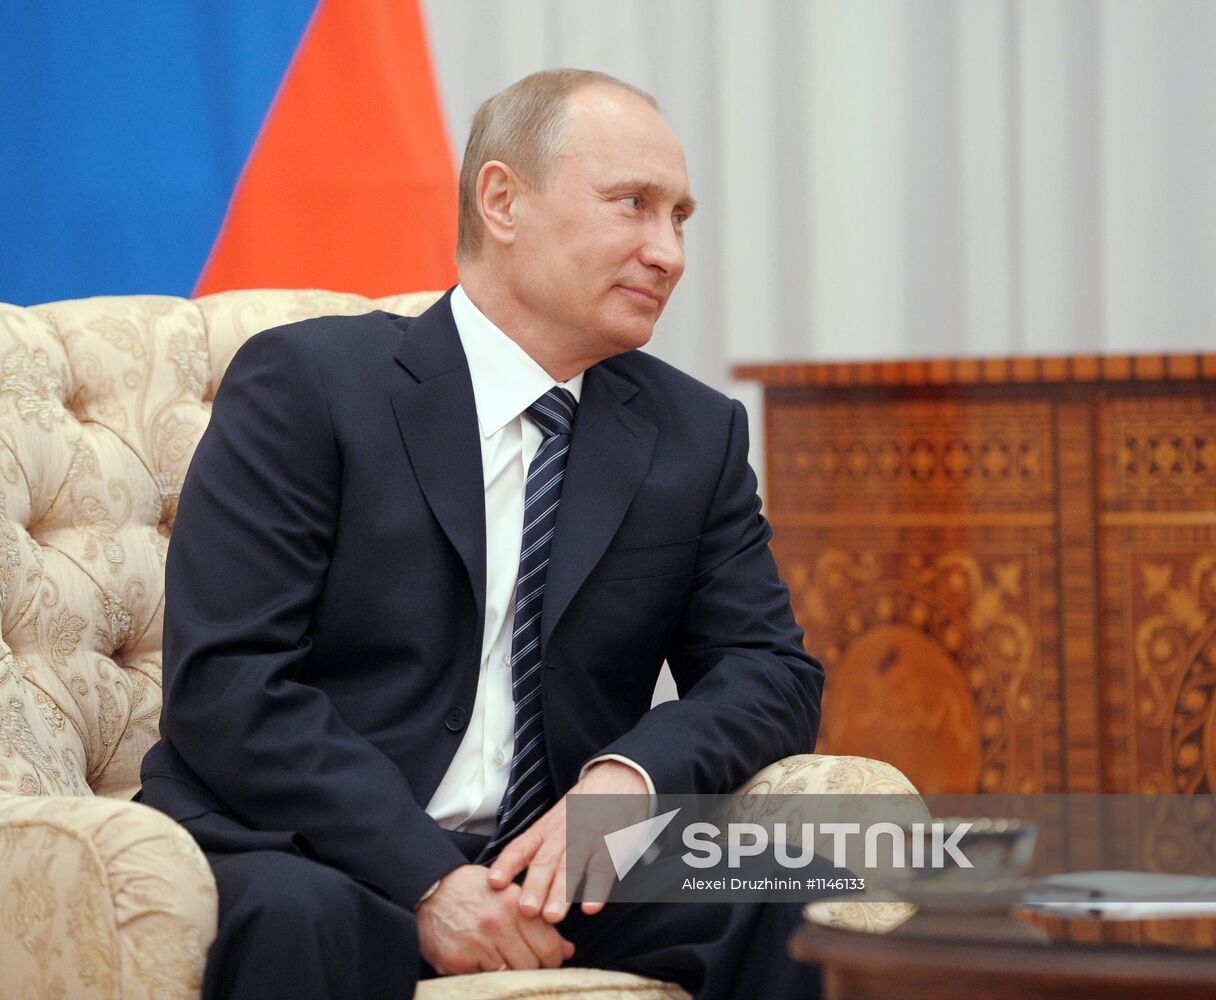 Official visit of Russian President Vladimir Putin to Uzbekistan